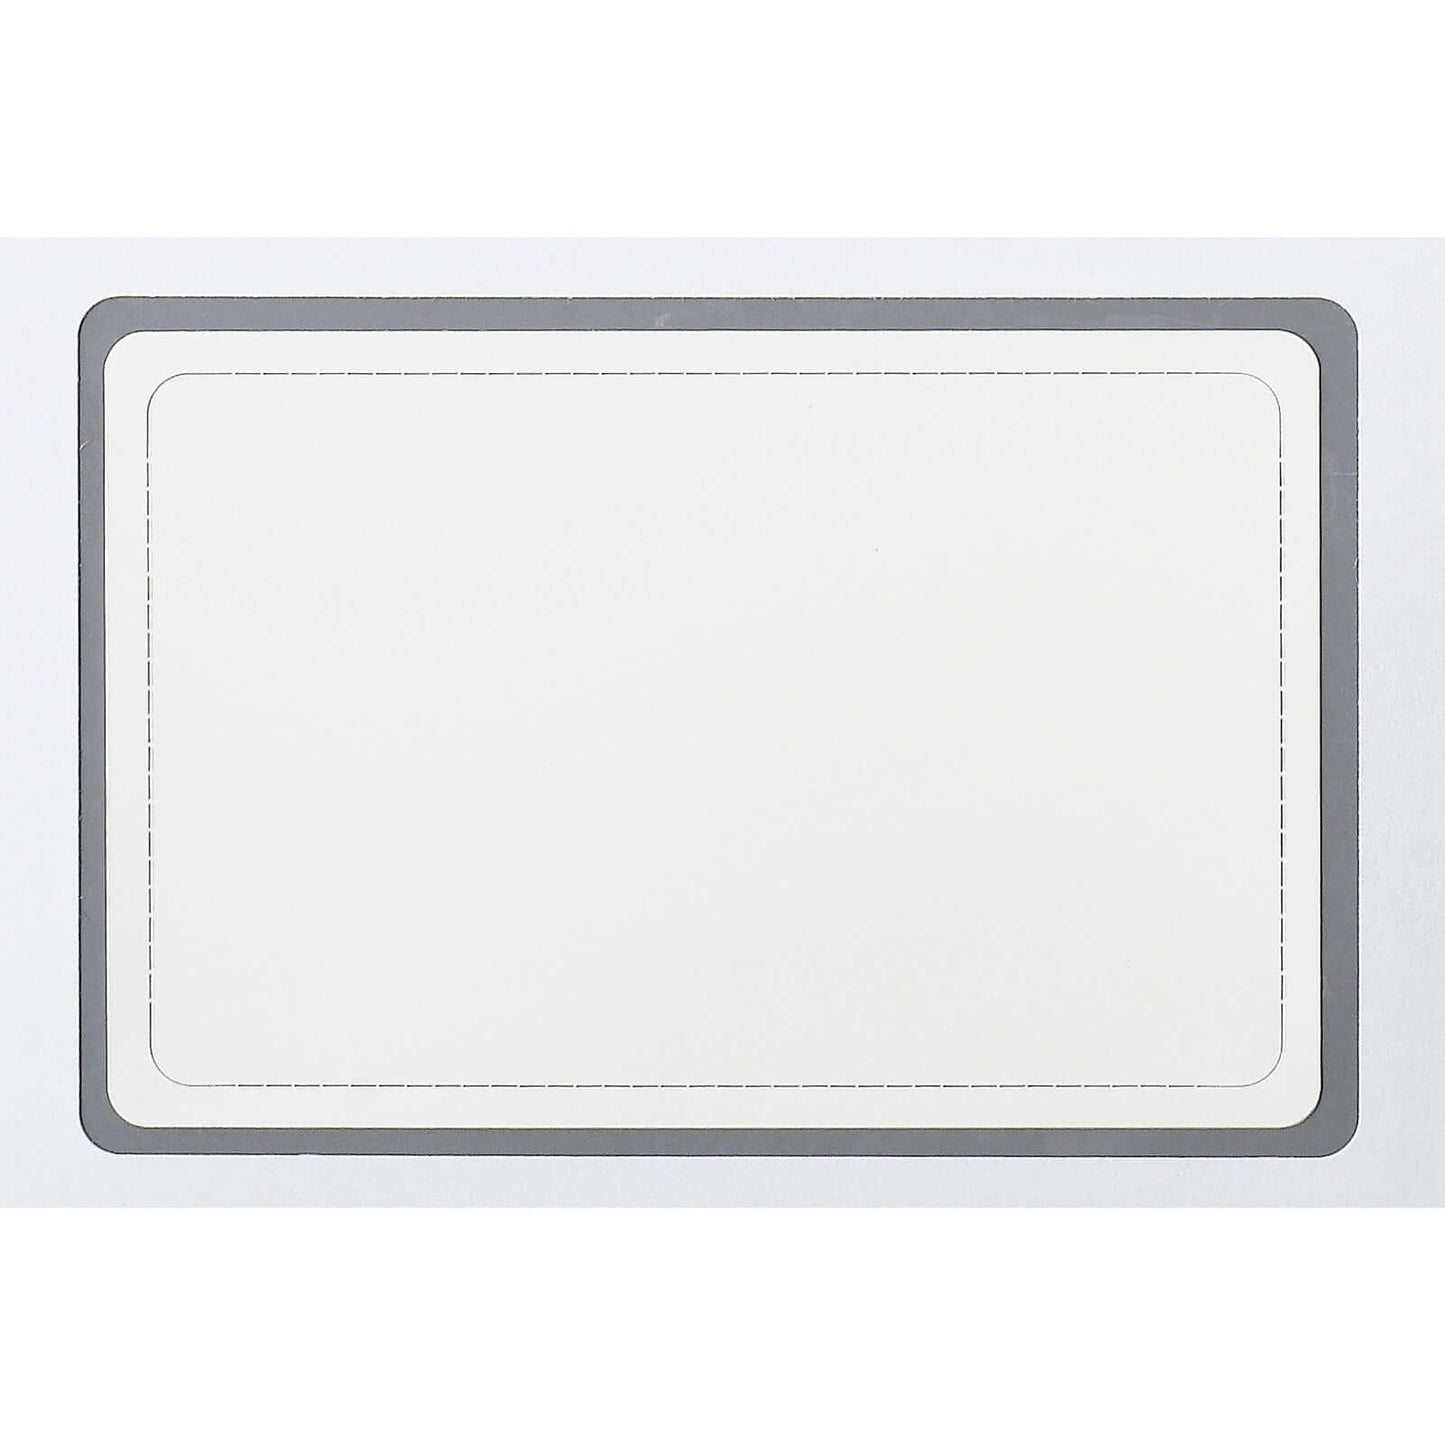 White card with name — ilo